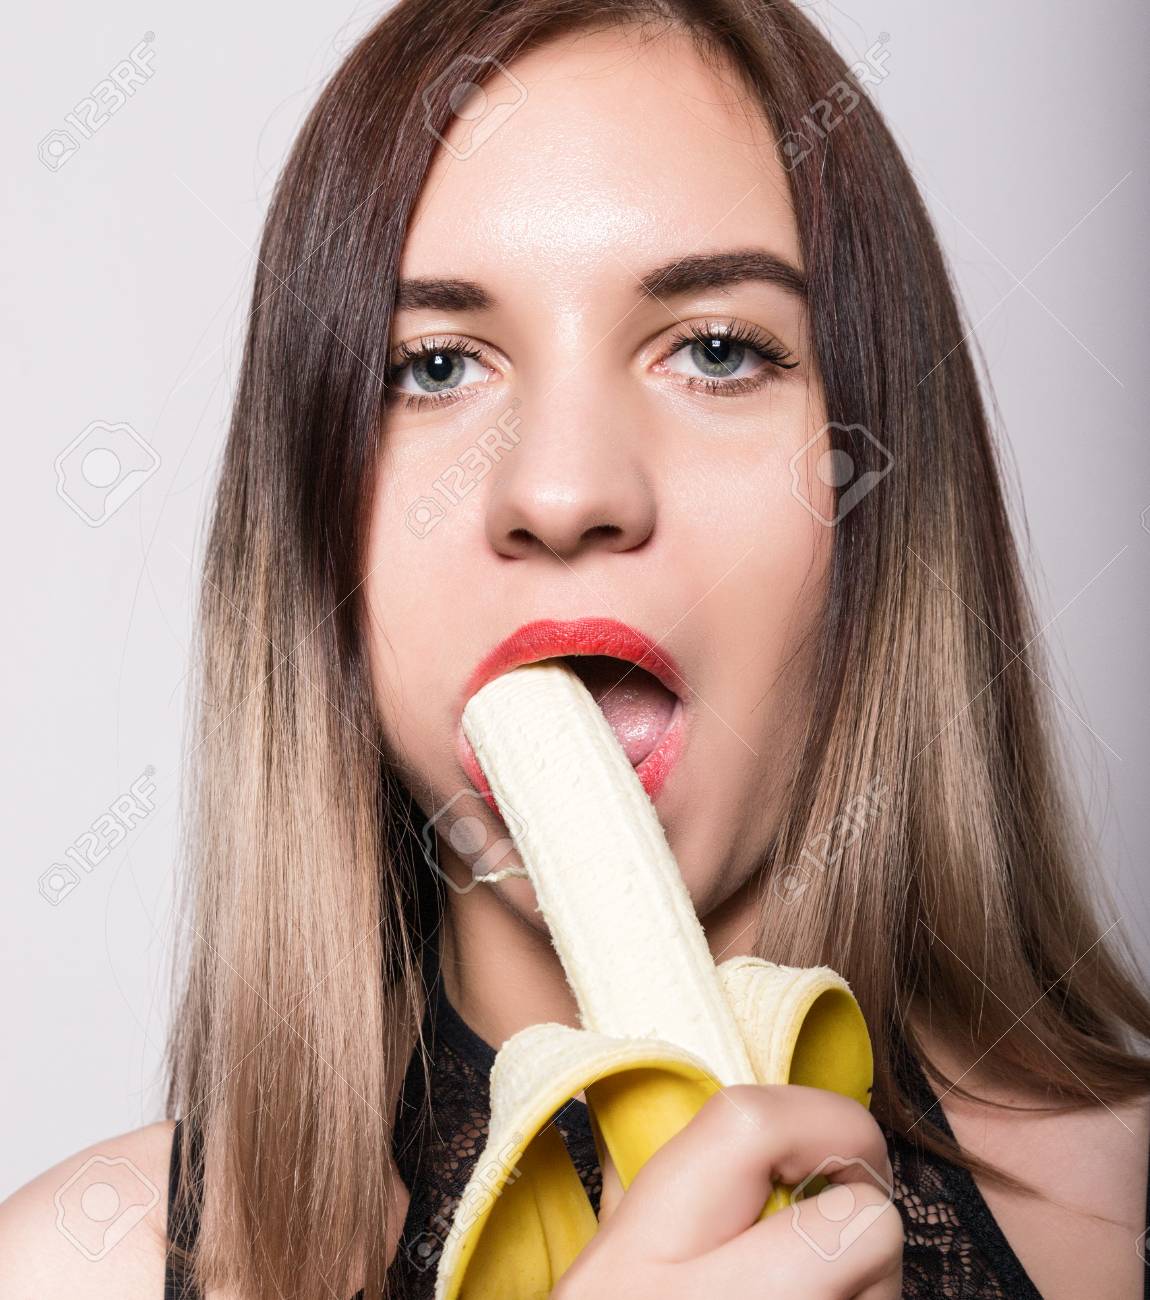 Girl Sucking On Banana zongoose edition